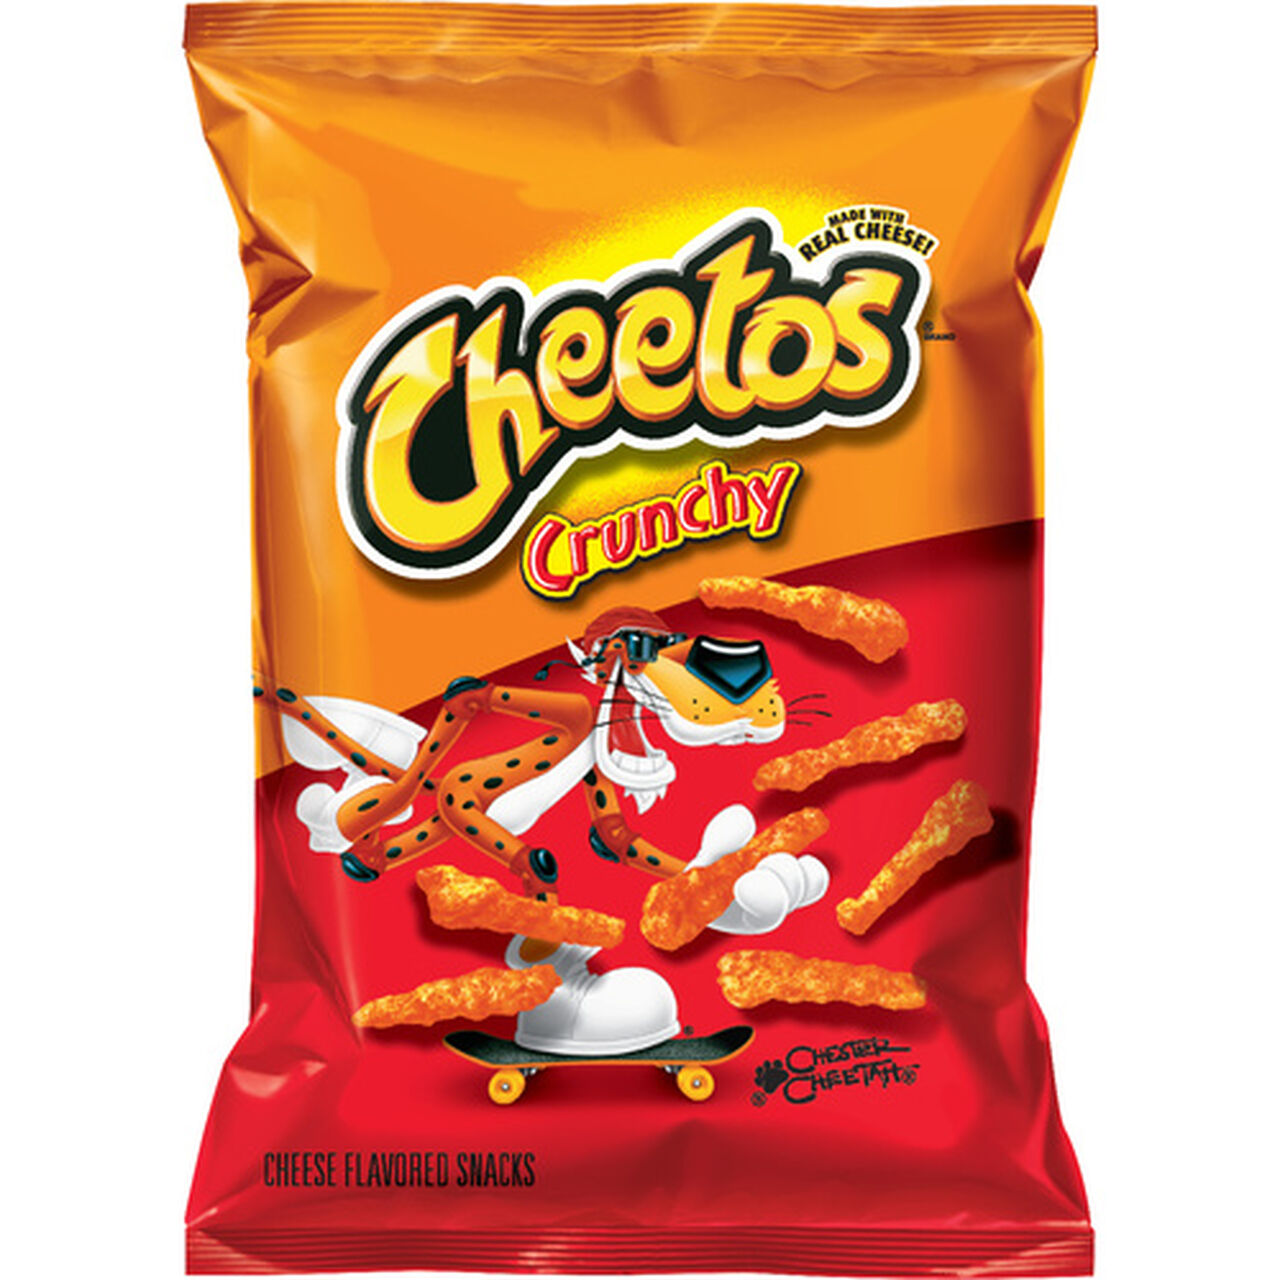 Cheetos Crunchy 2 oz image number 0